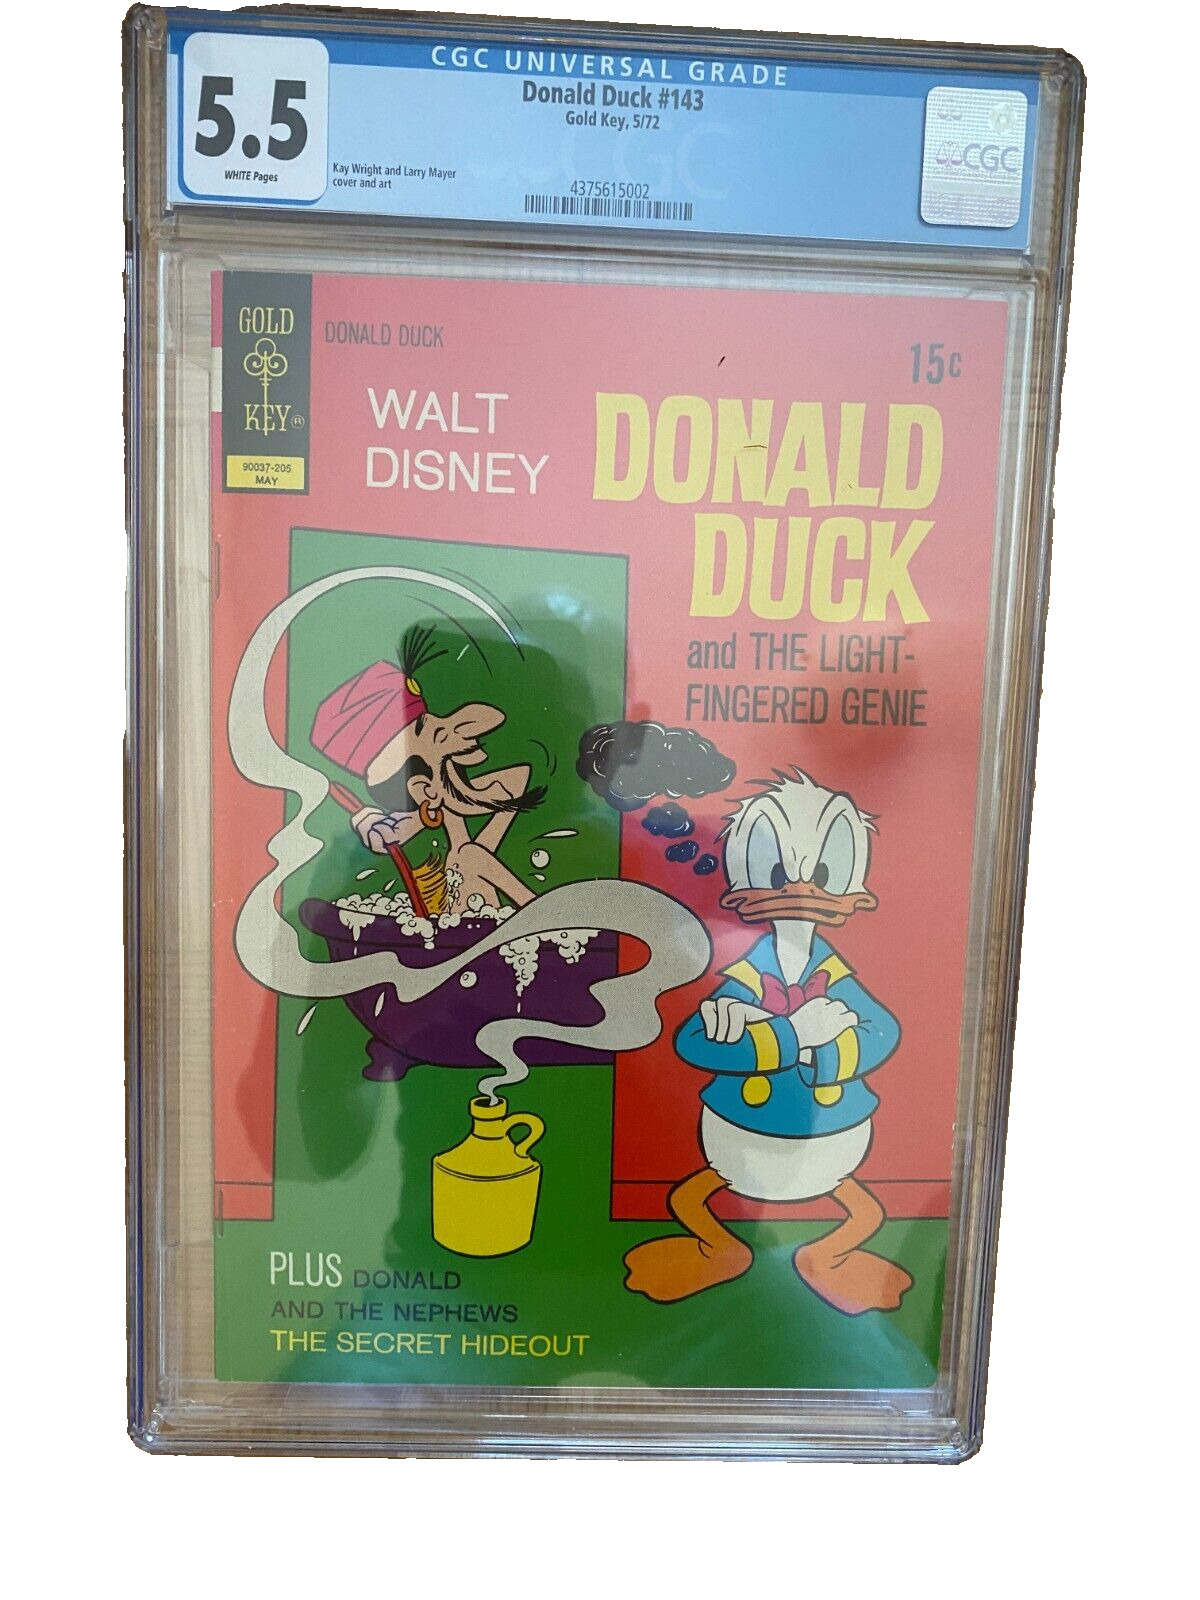 Donald Duck Gold Key 5/72, #143 cgc 5.5 Graded Comic.